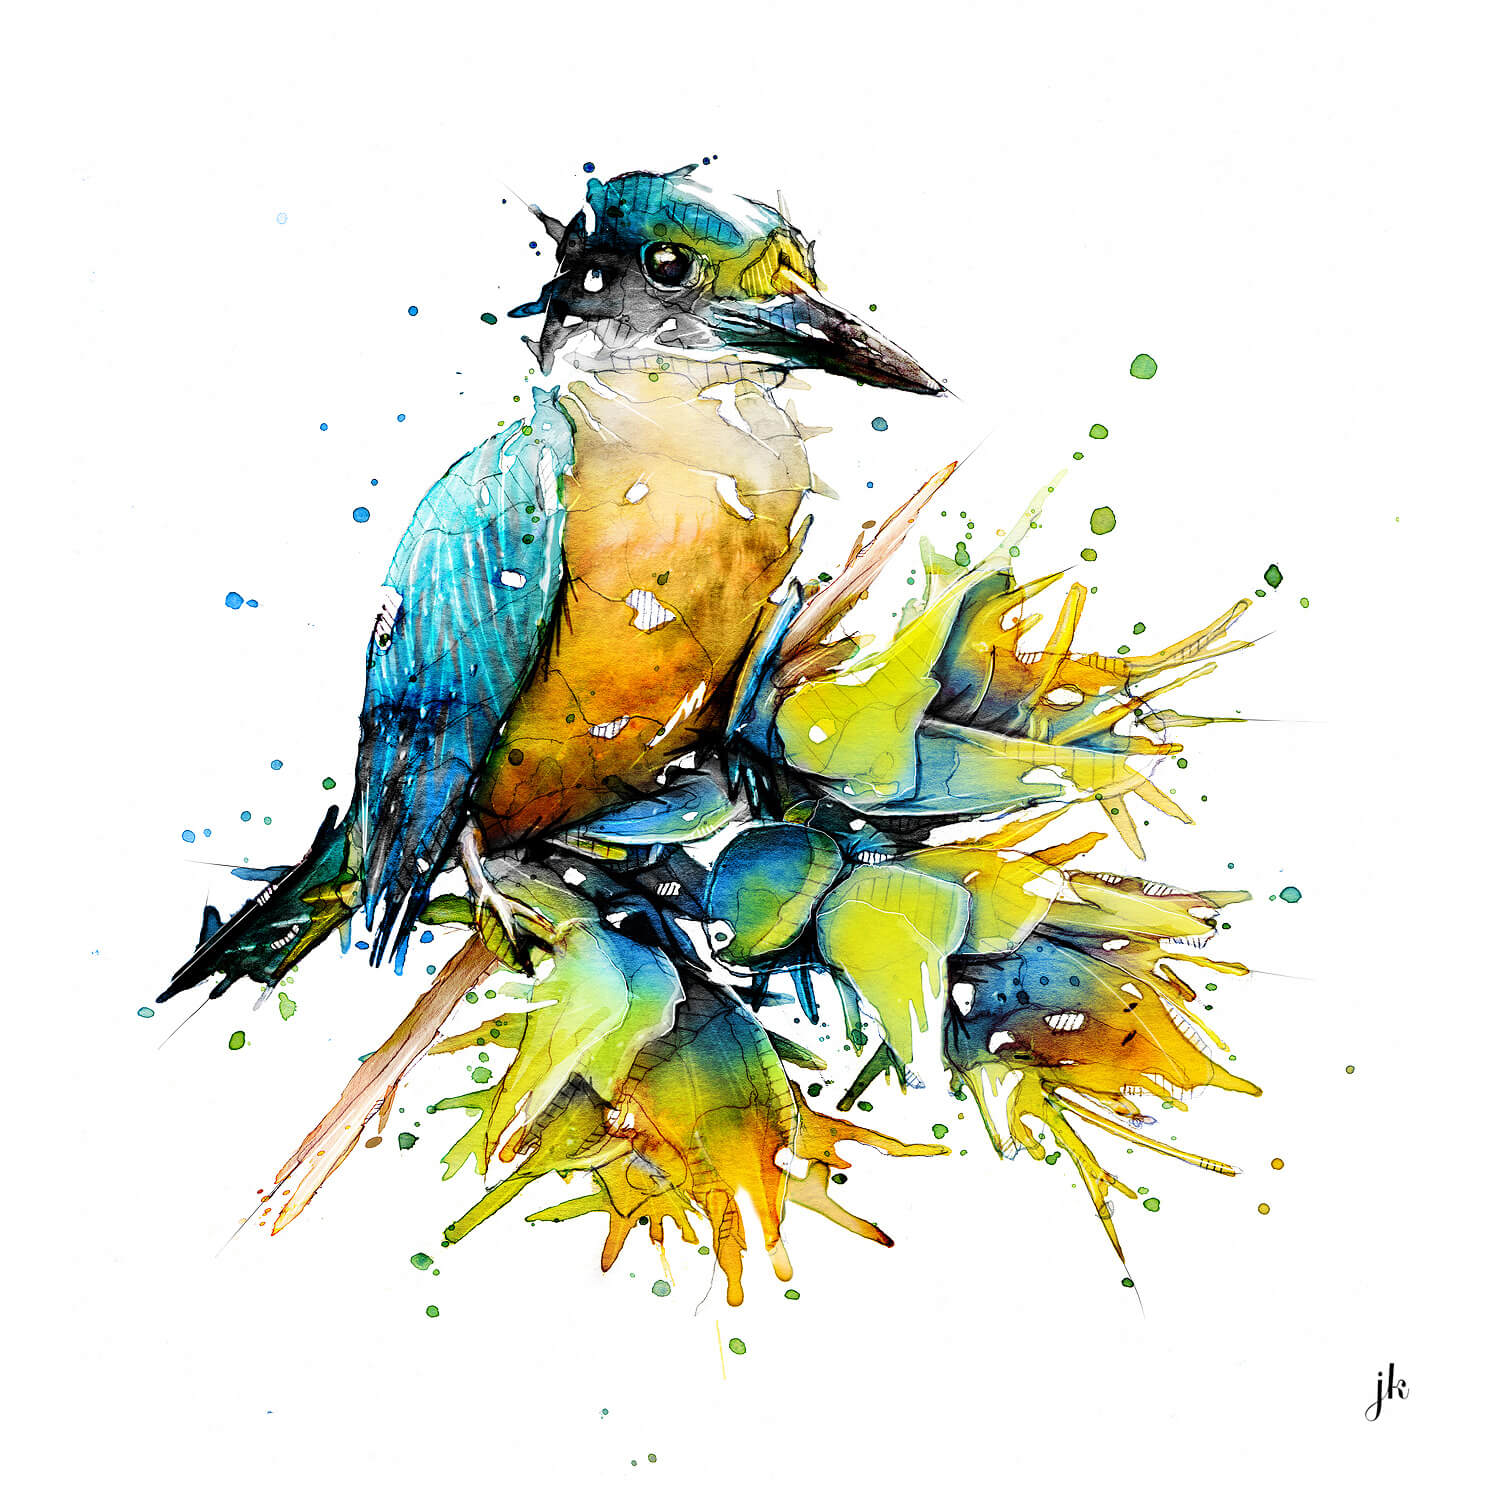 Kingfisher Canvas Print